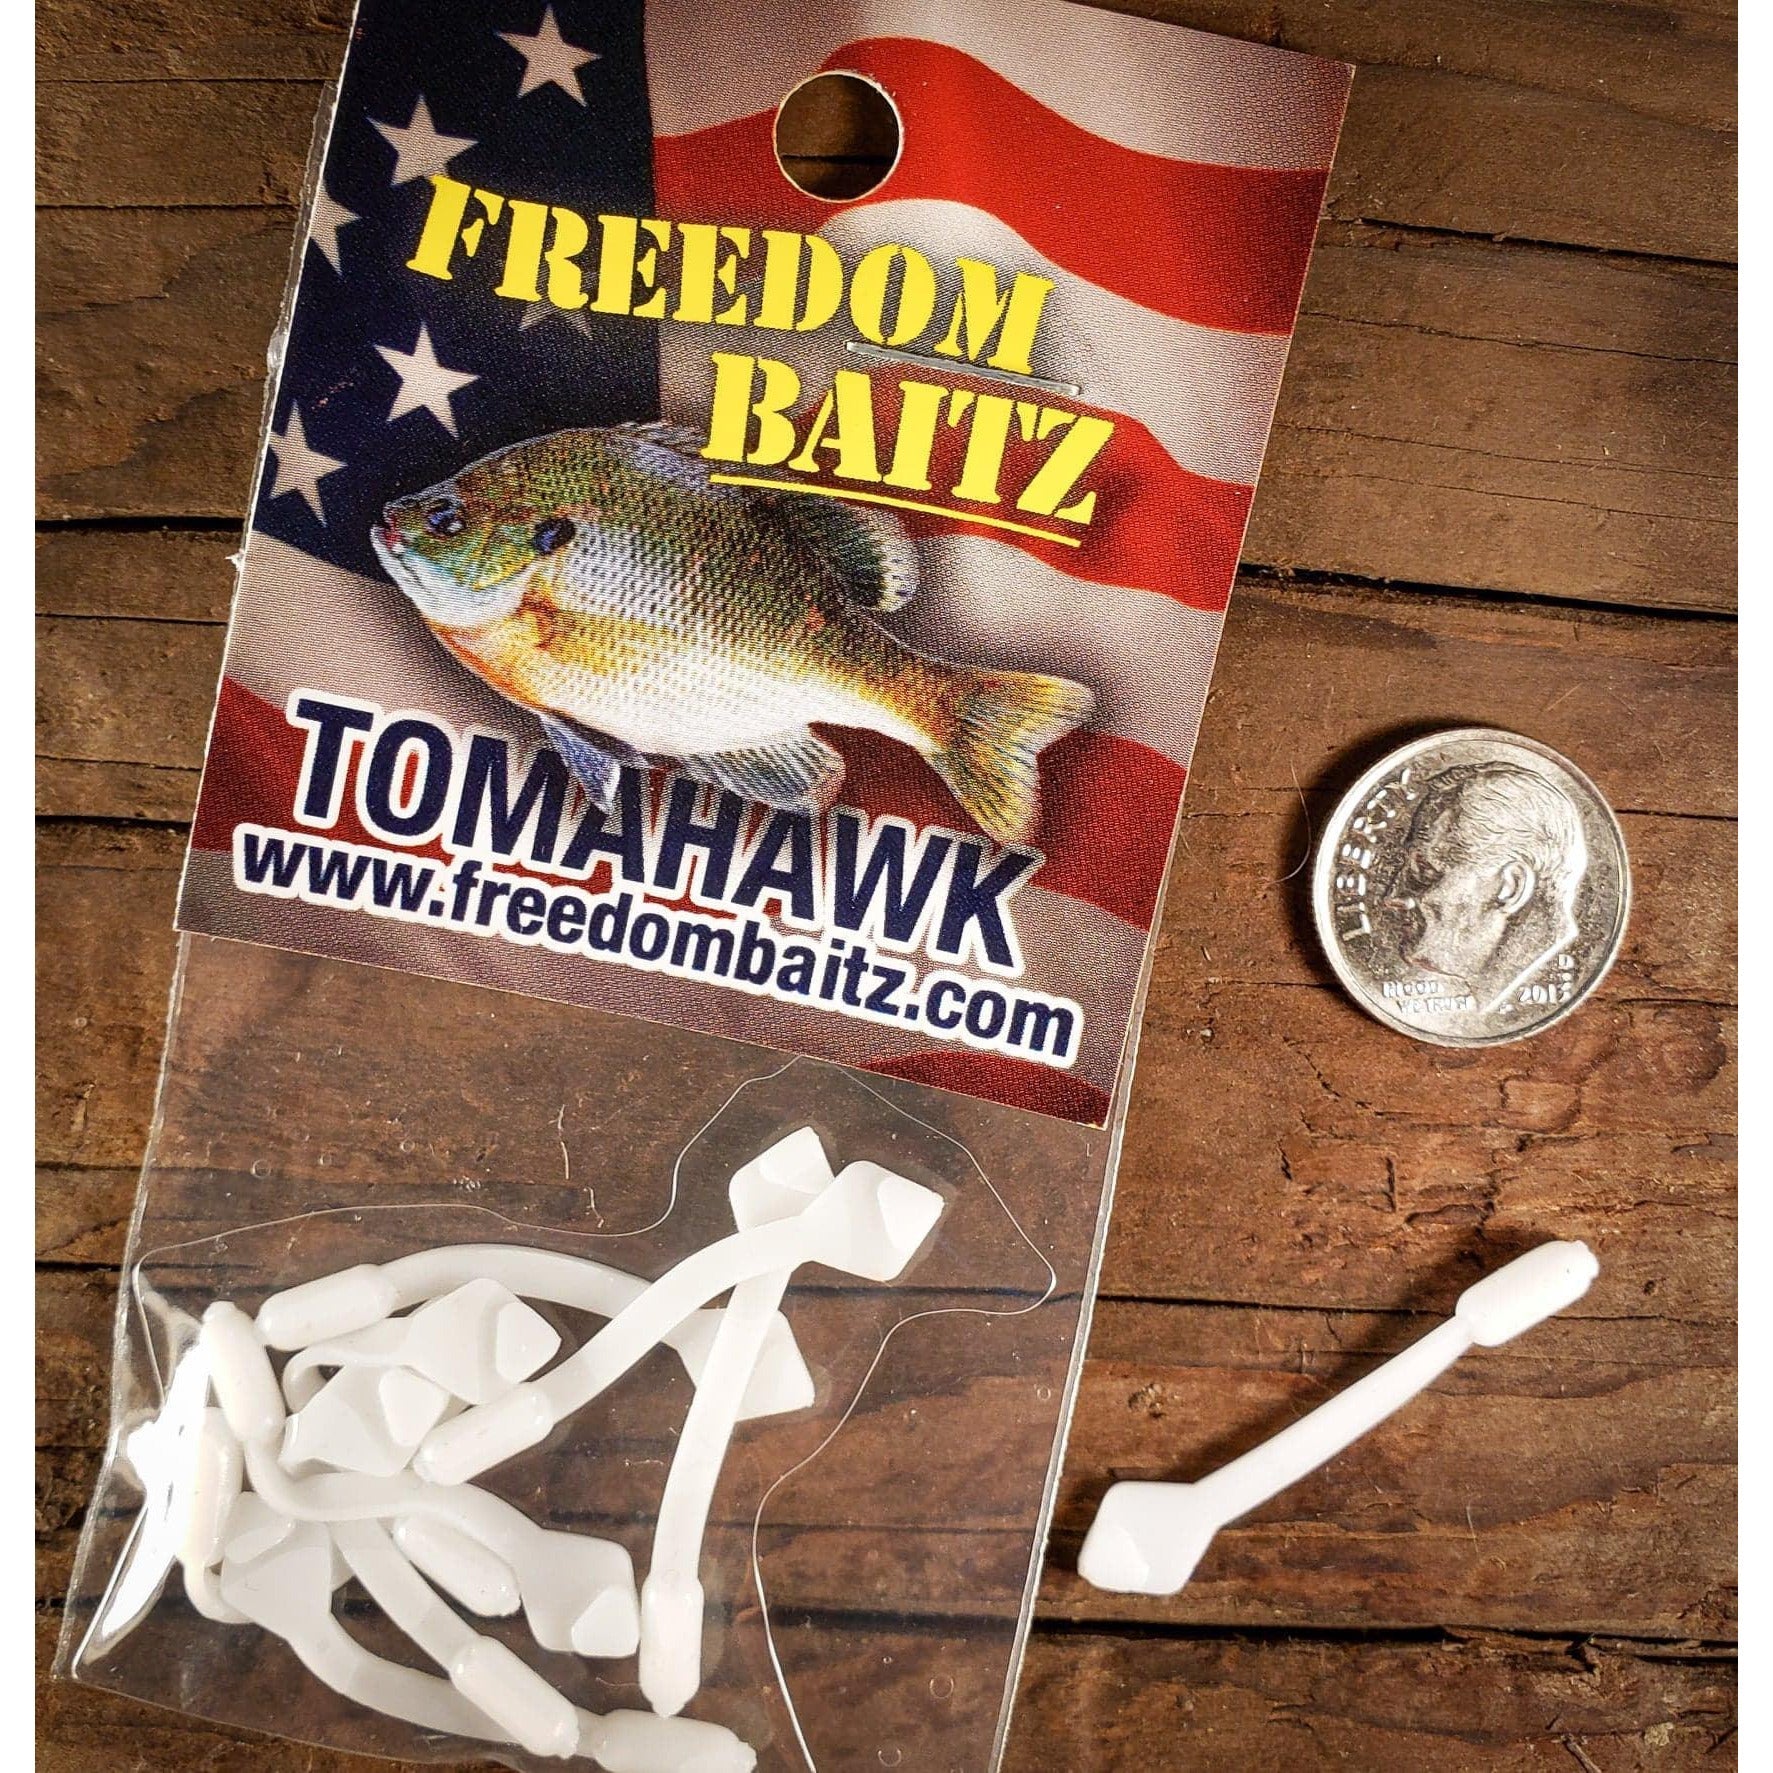 Tomahawk – Freedom Baitz